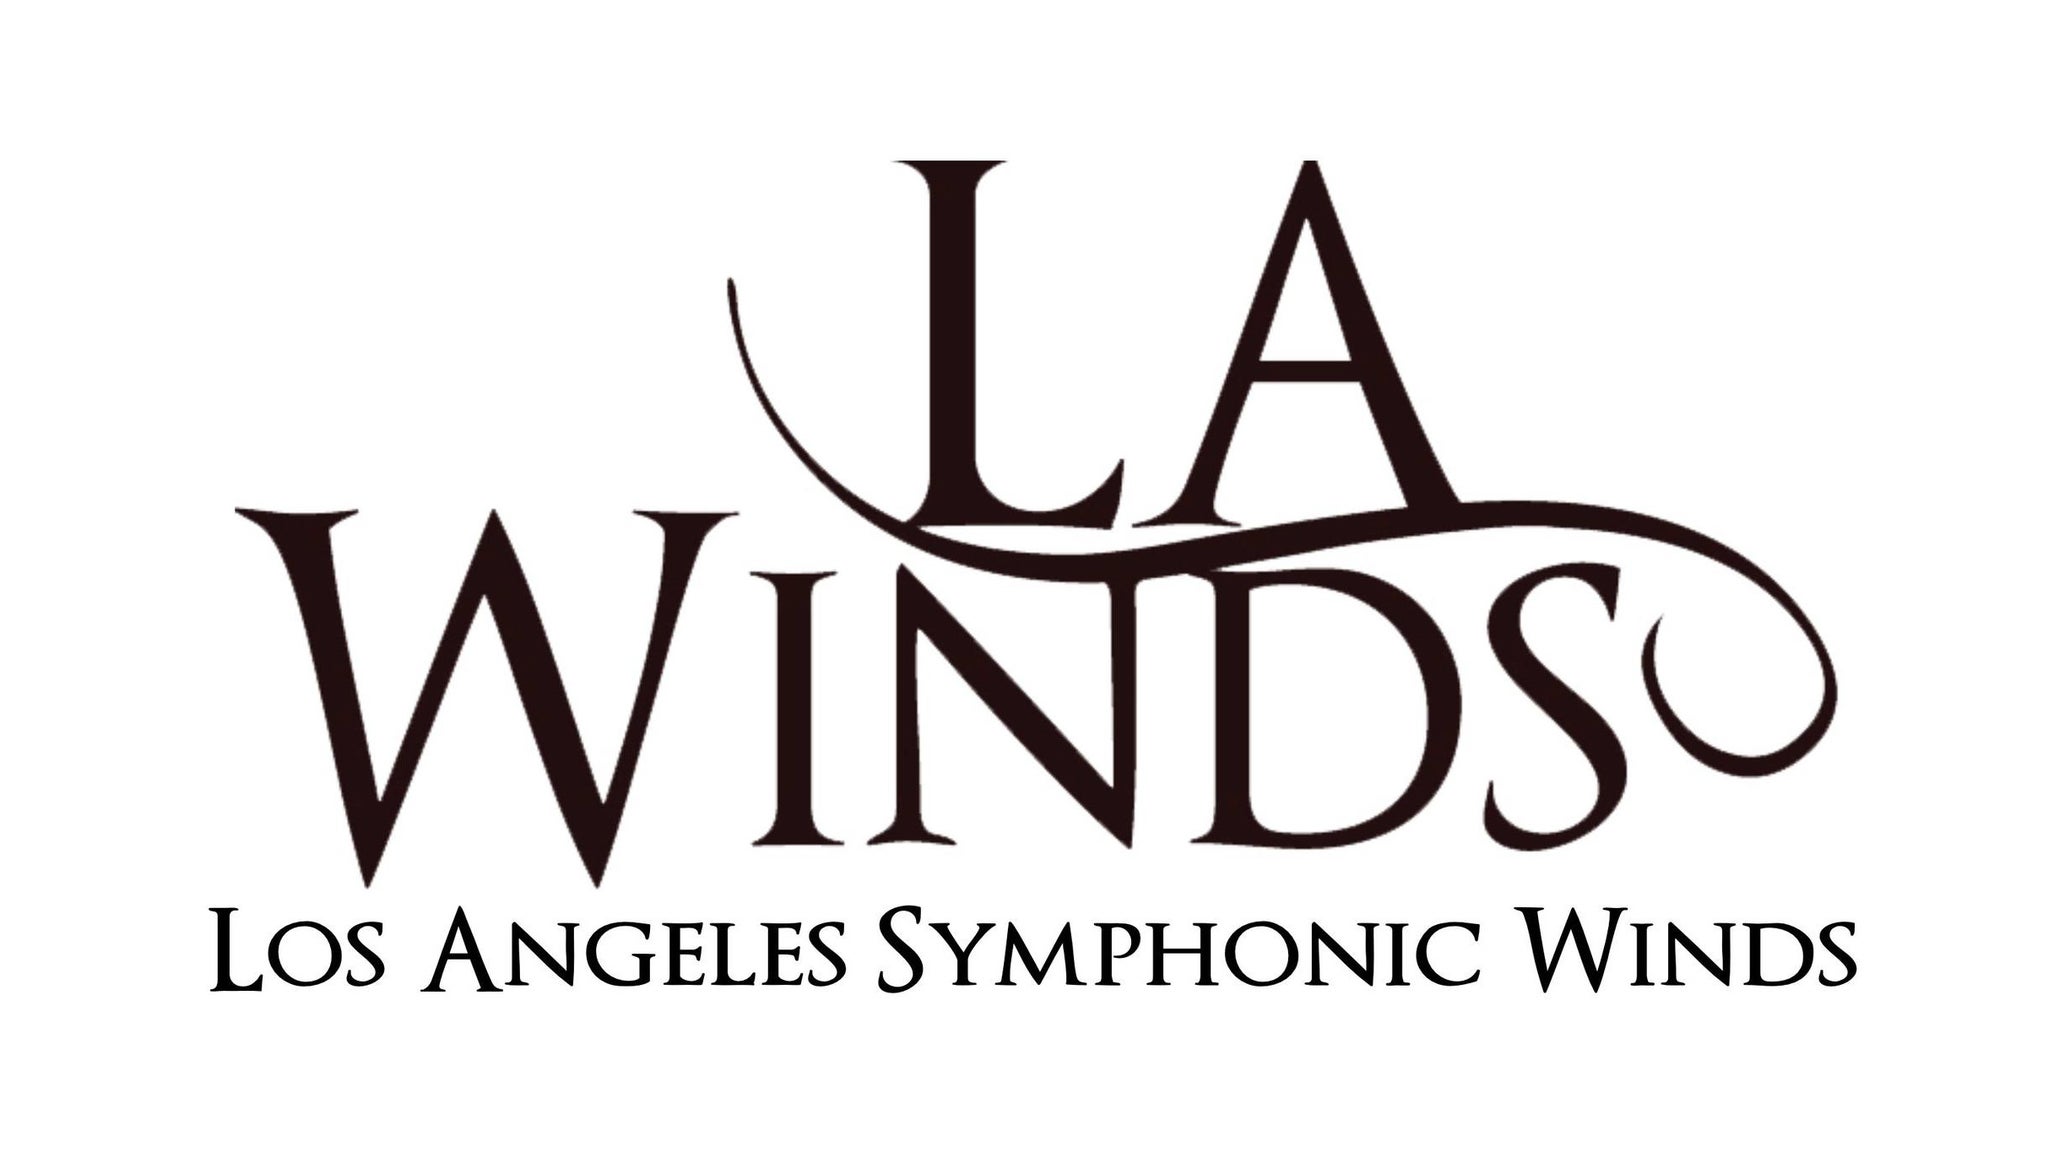 LA Winds presents Concert 3: Pre-Independence Day Celebration